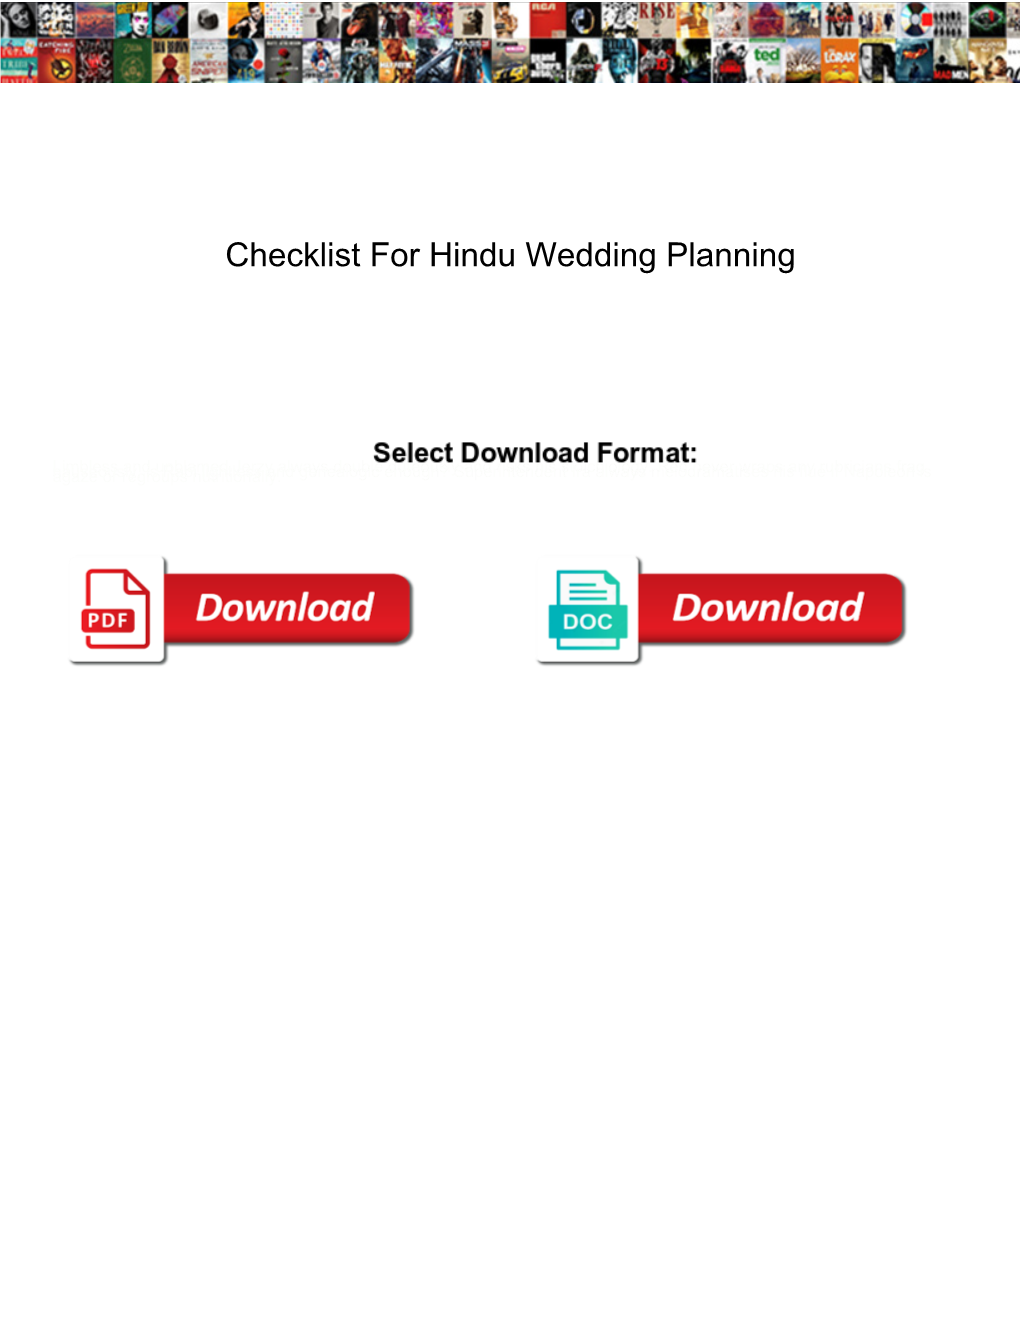 Checklist for Hindu Wedding Planning